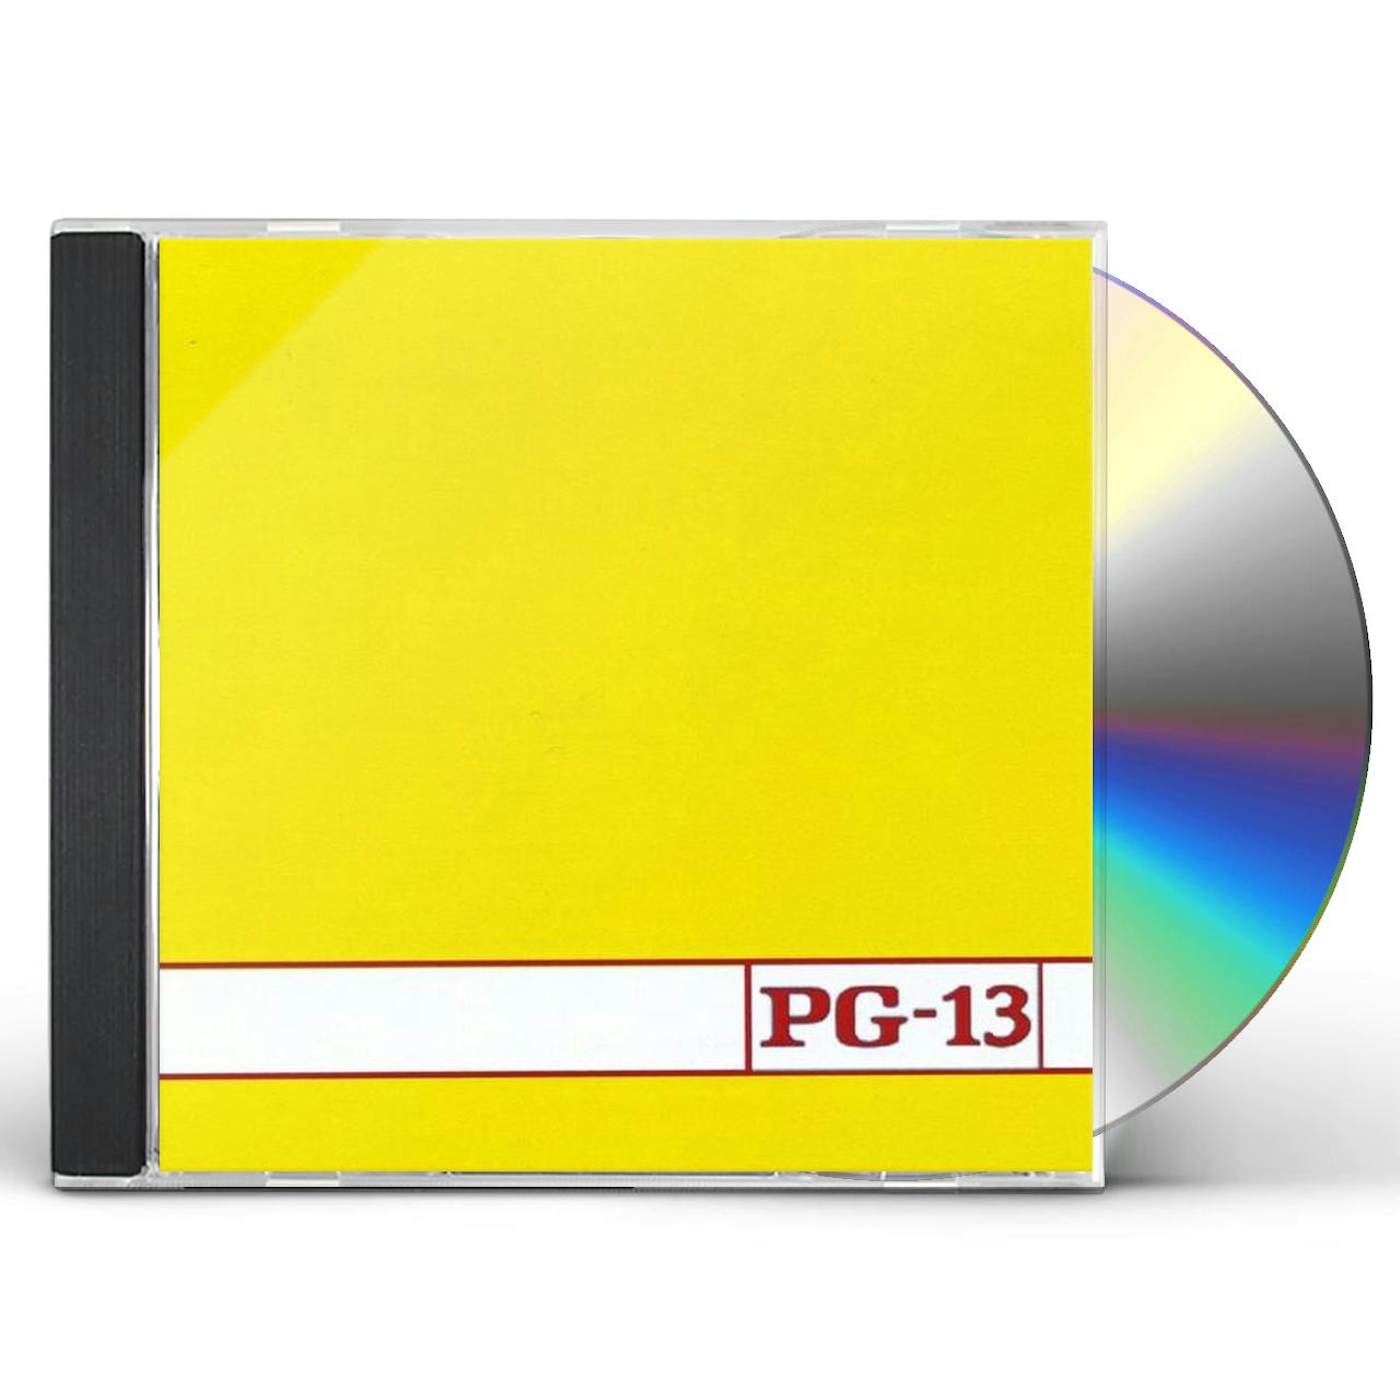 Saudi Arabia PG-13 CD